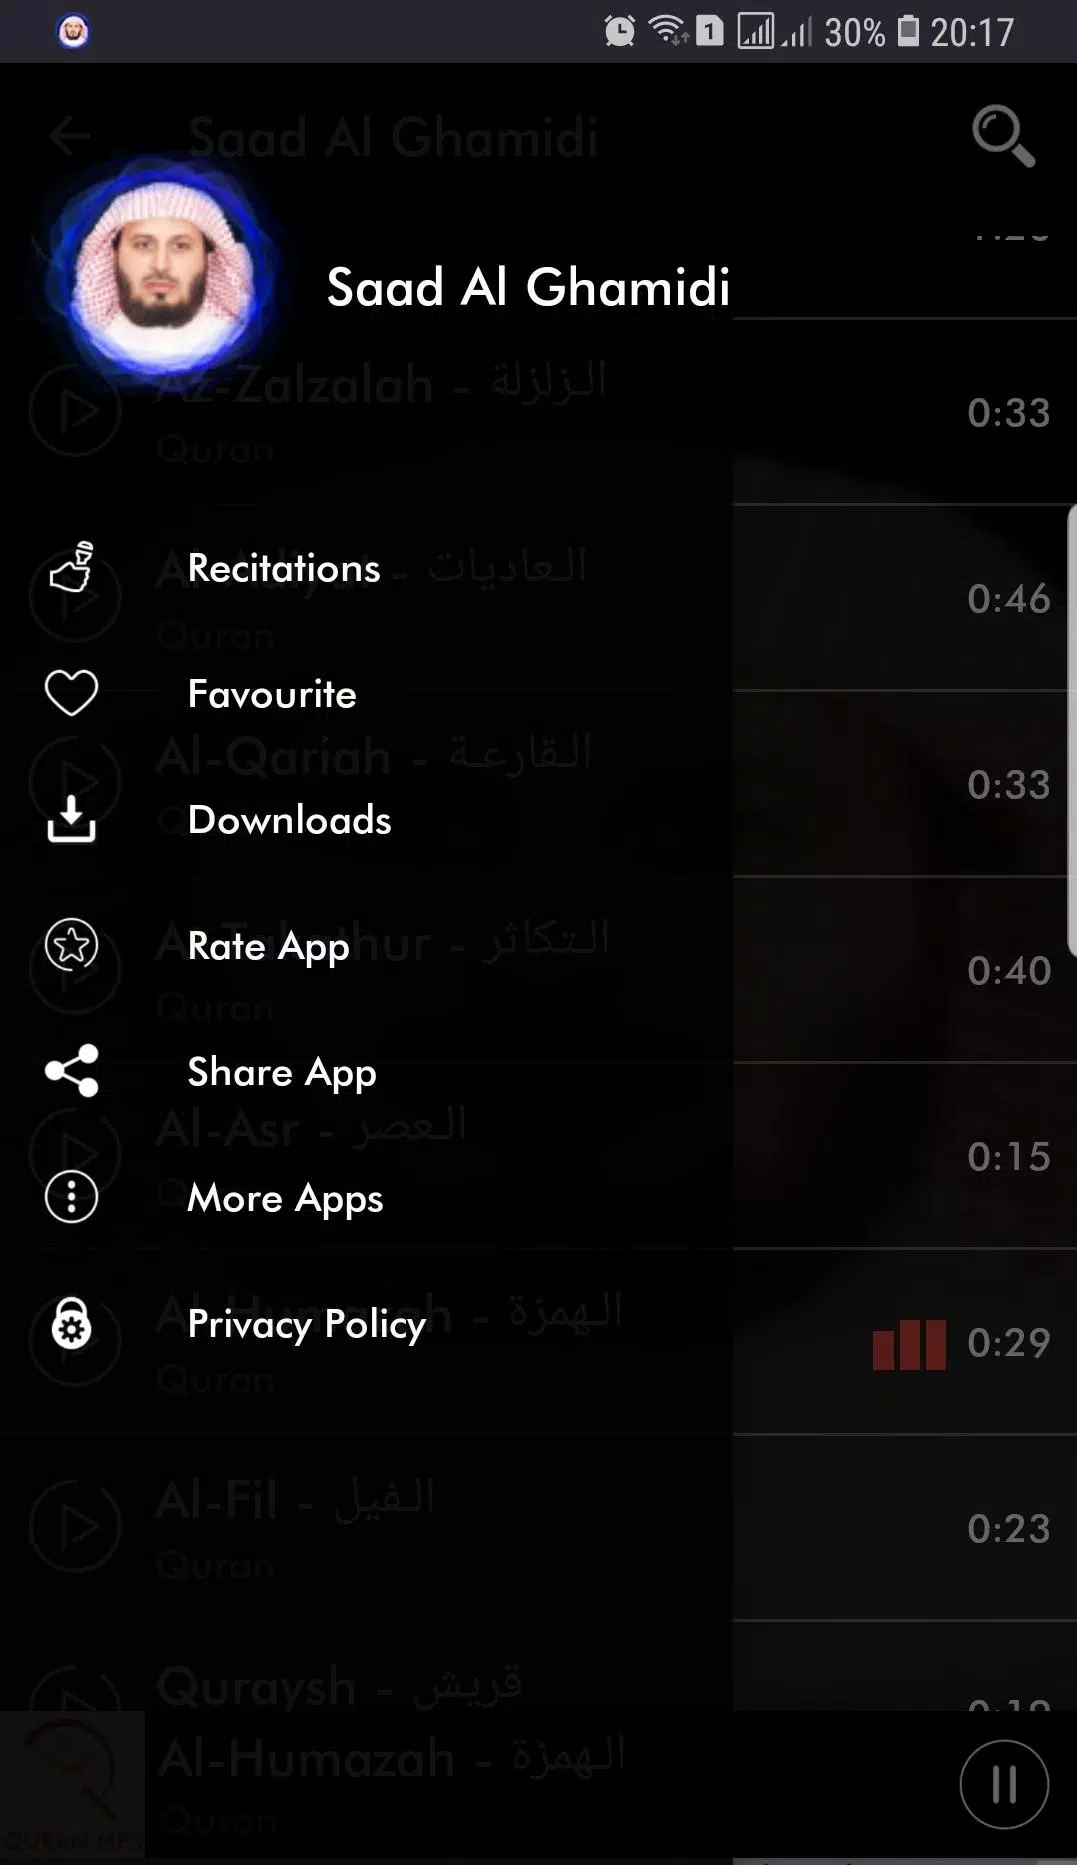 Quran MP3 Saad Al Ghamidi APK pour Android Télécharger